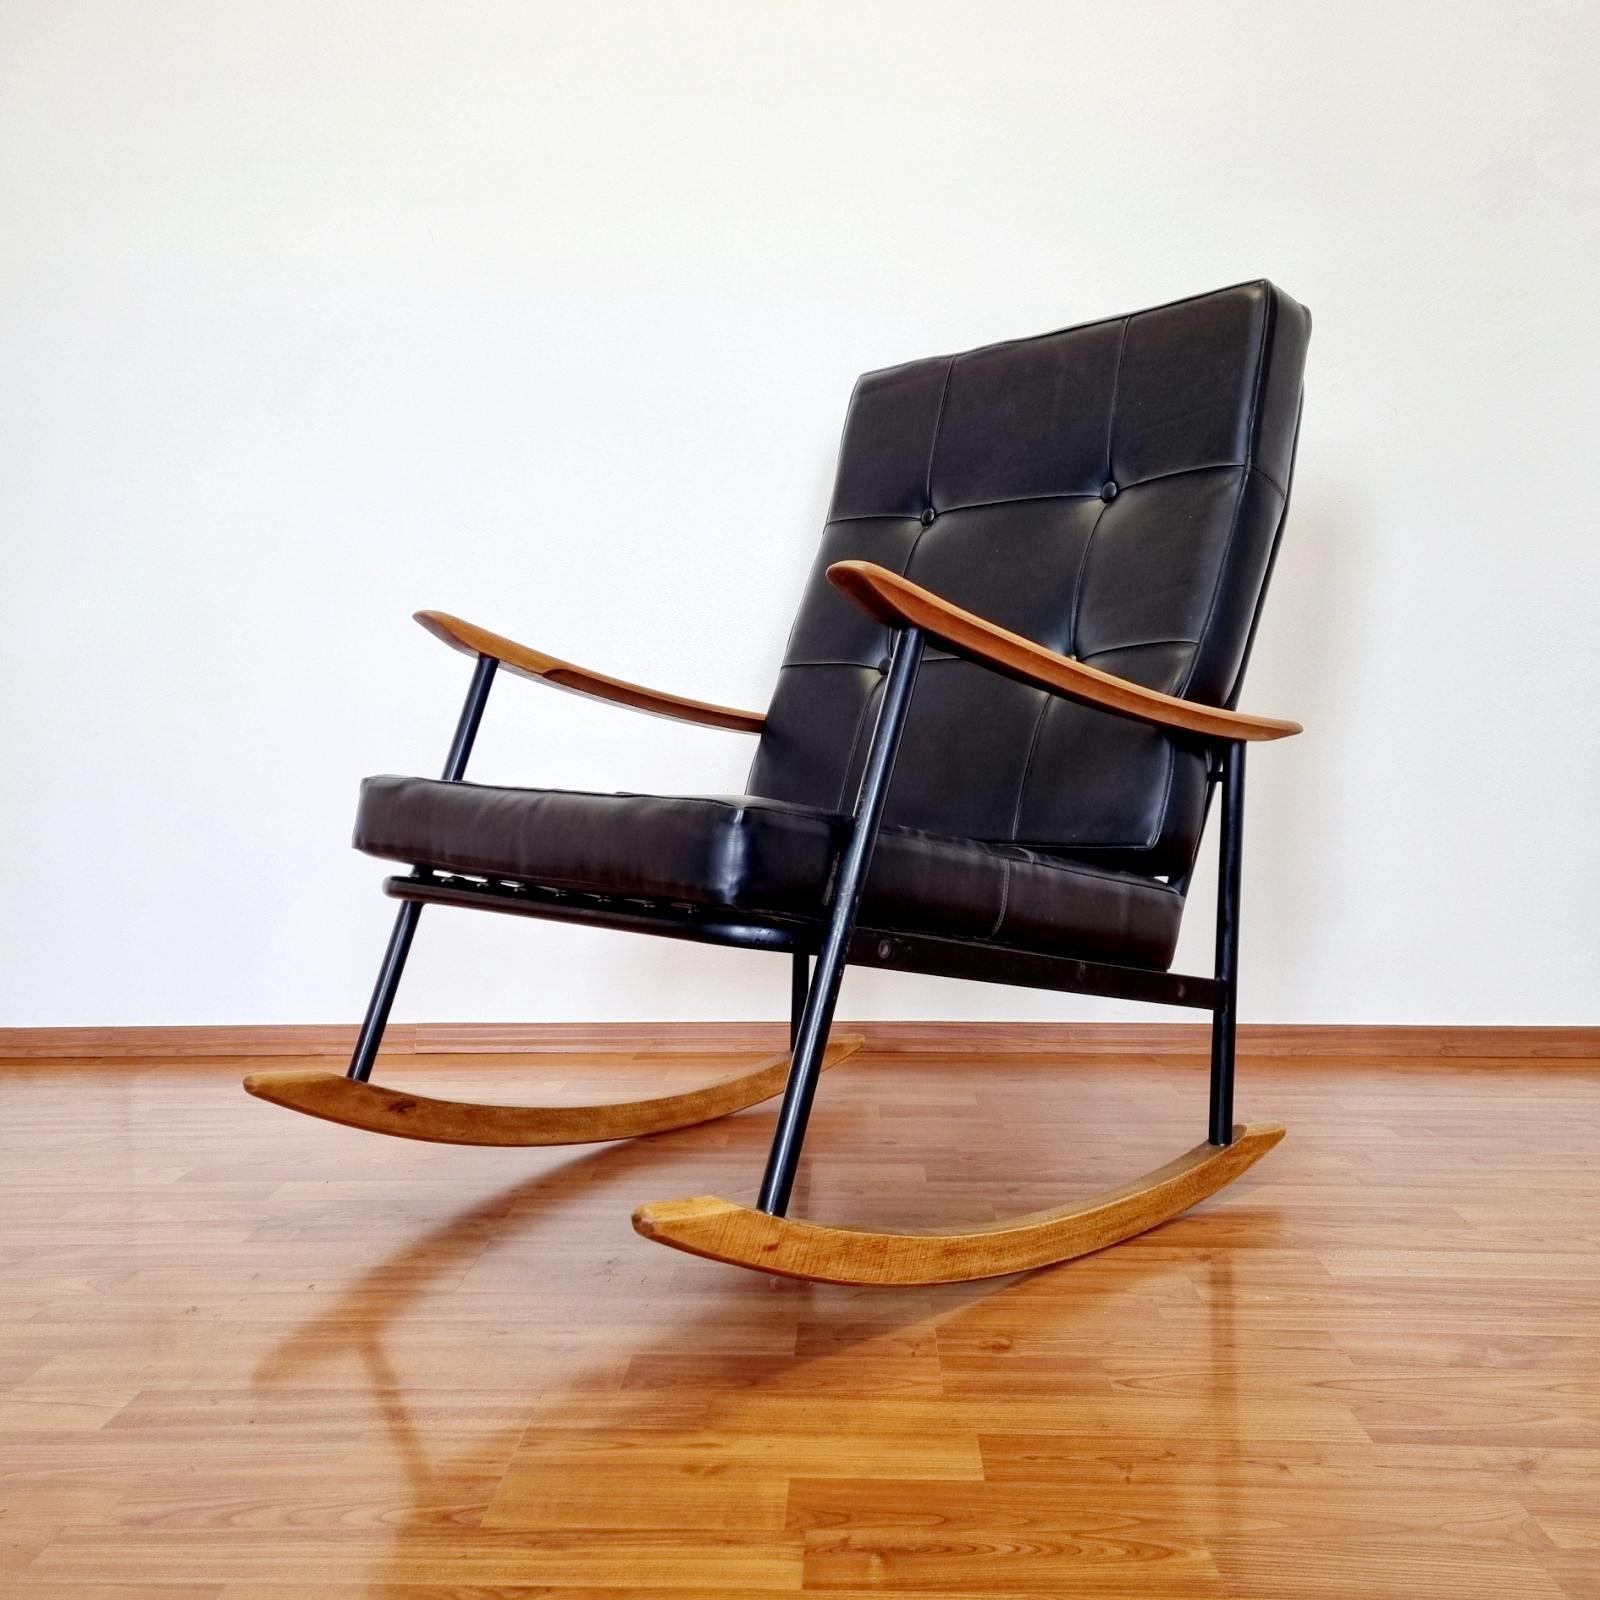 Italian Modern Rocking Chair Designed by Gastone Rinaldi, Italy 60s For Sale 3